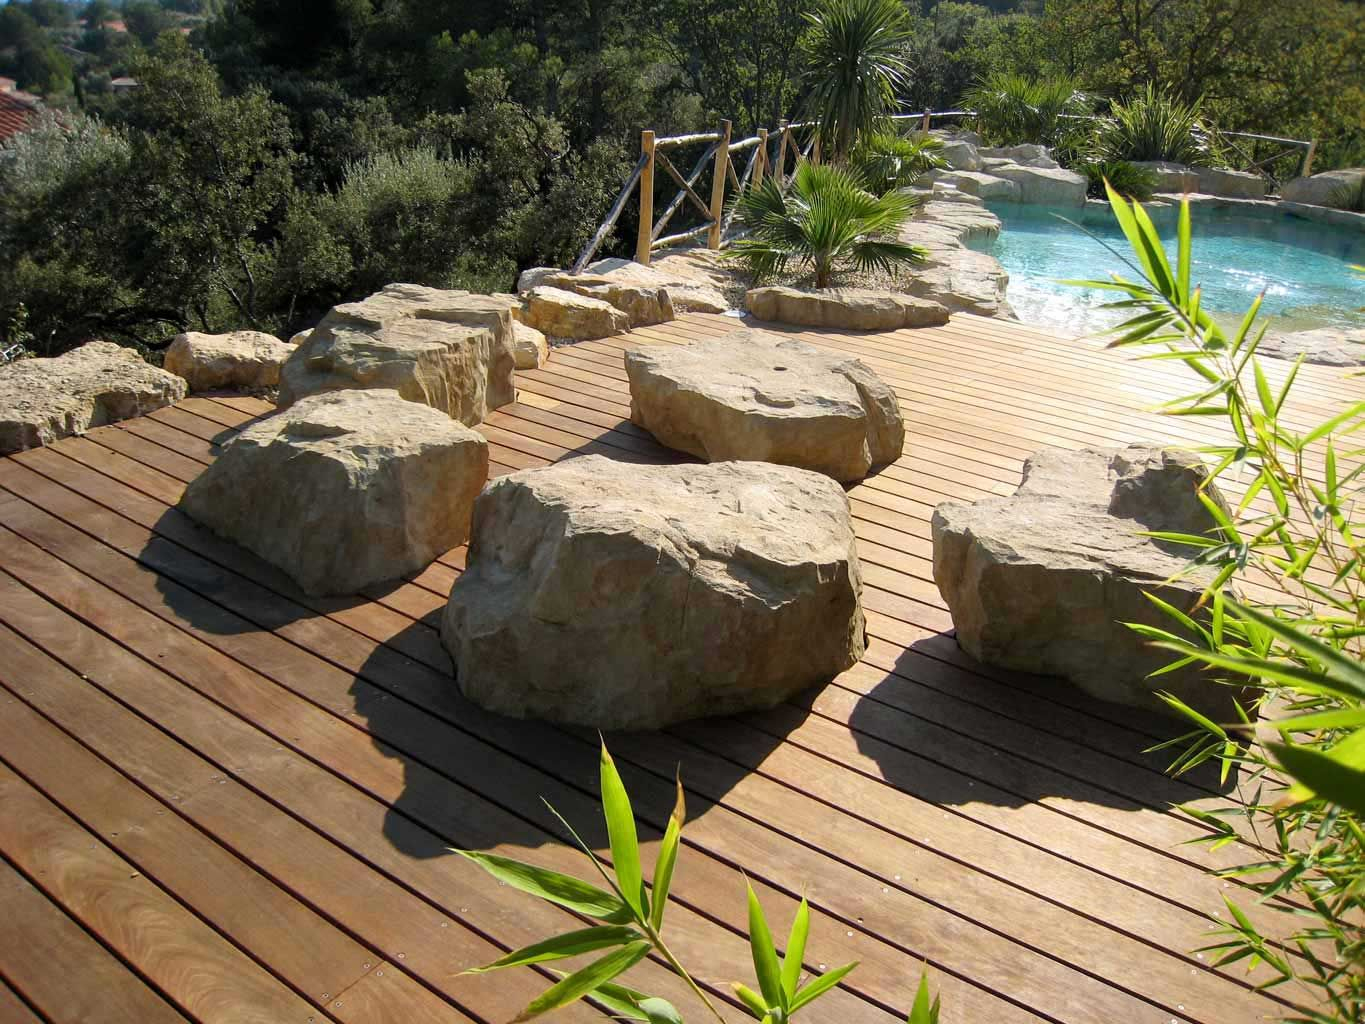 Wooden Terrace Around The Pool In Rocks | Terrasse Bois ... concernant Bois Terrasse Exotique